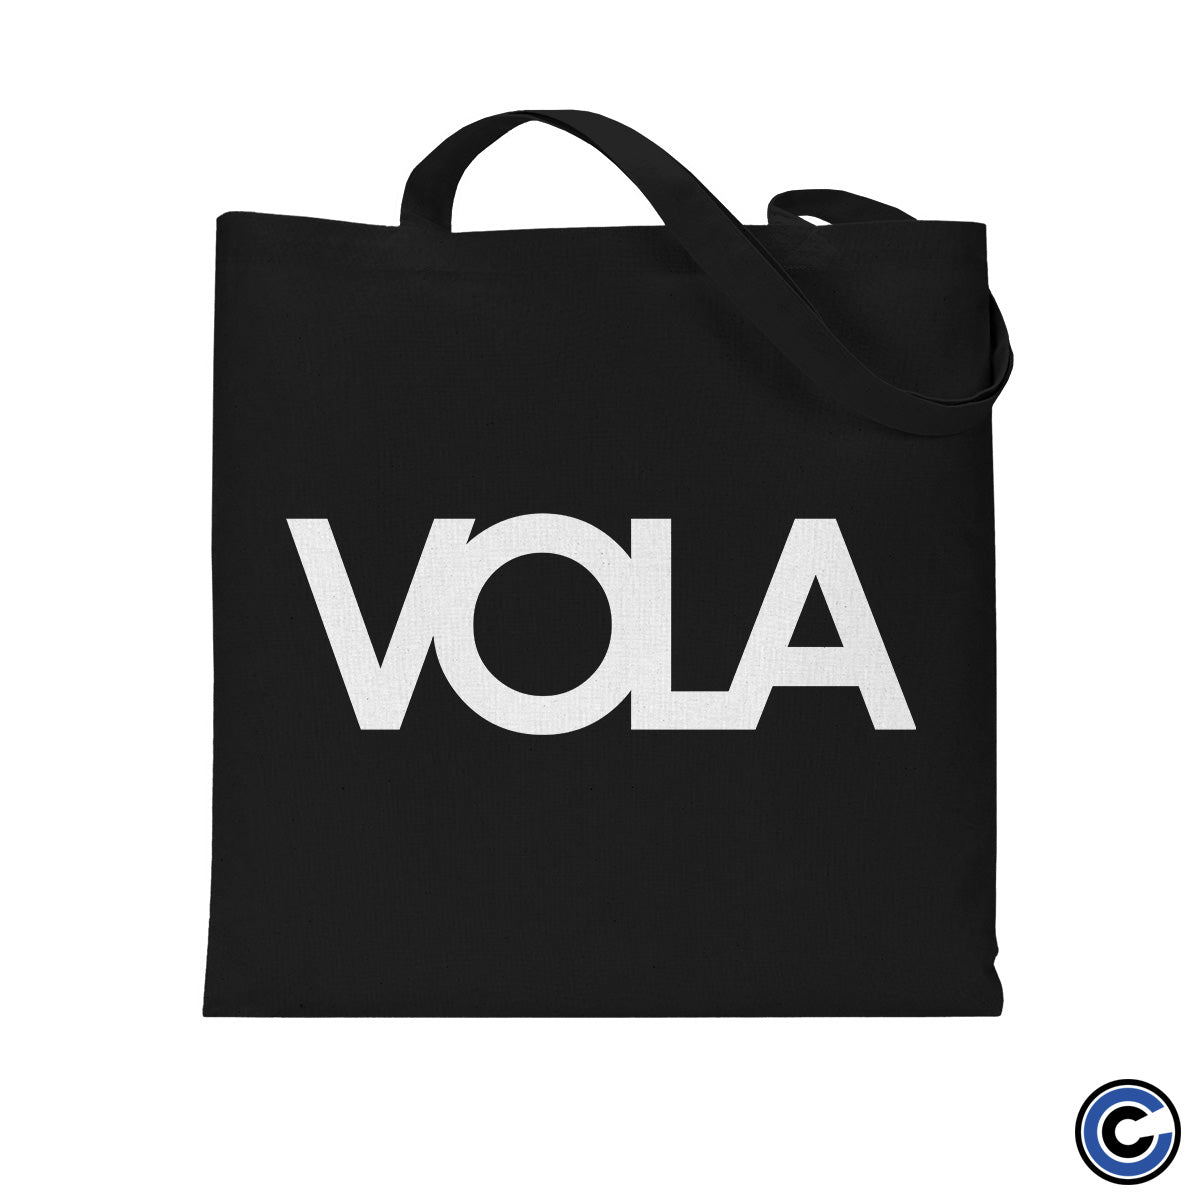 Vola "Light" Tote Bag